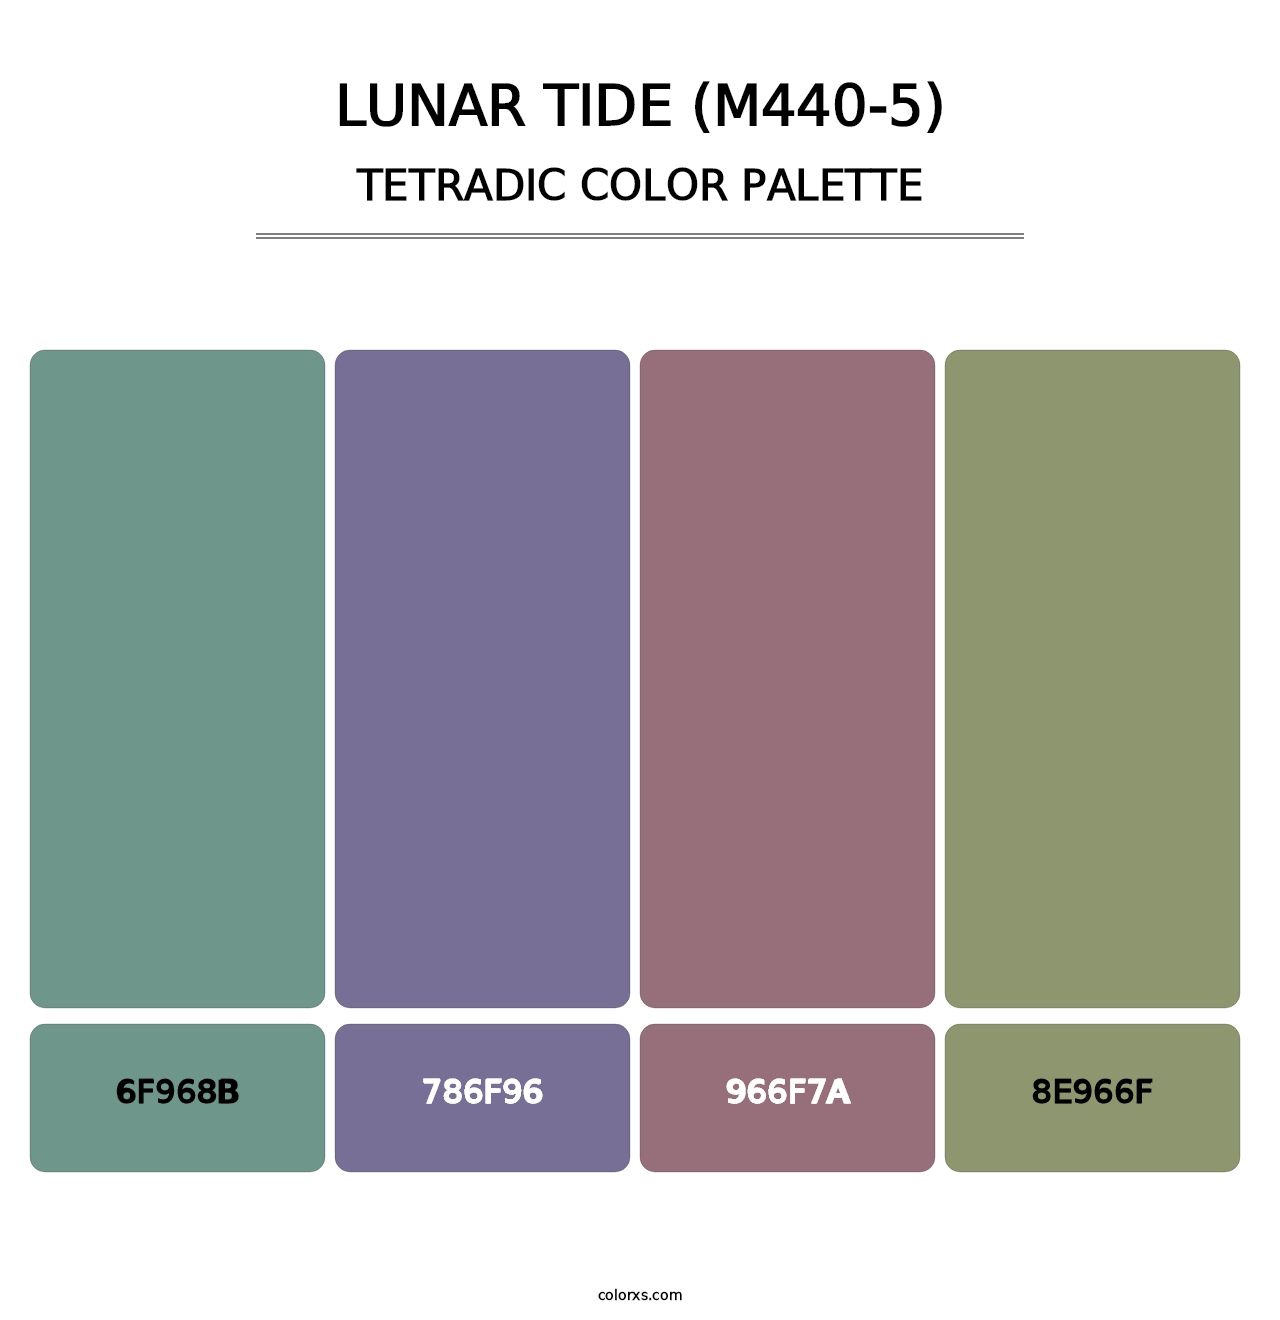 Lunar Tide (M440-5) - Tetradic Color Palette